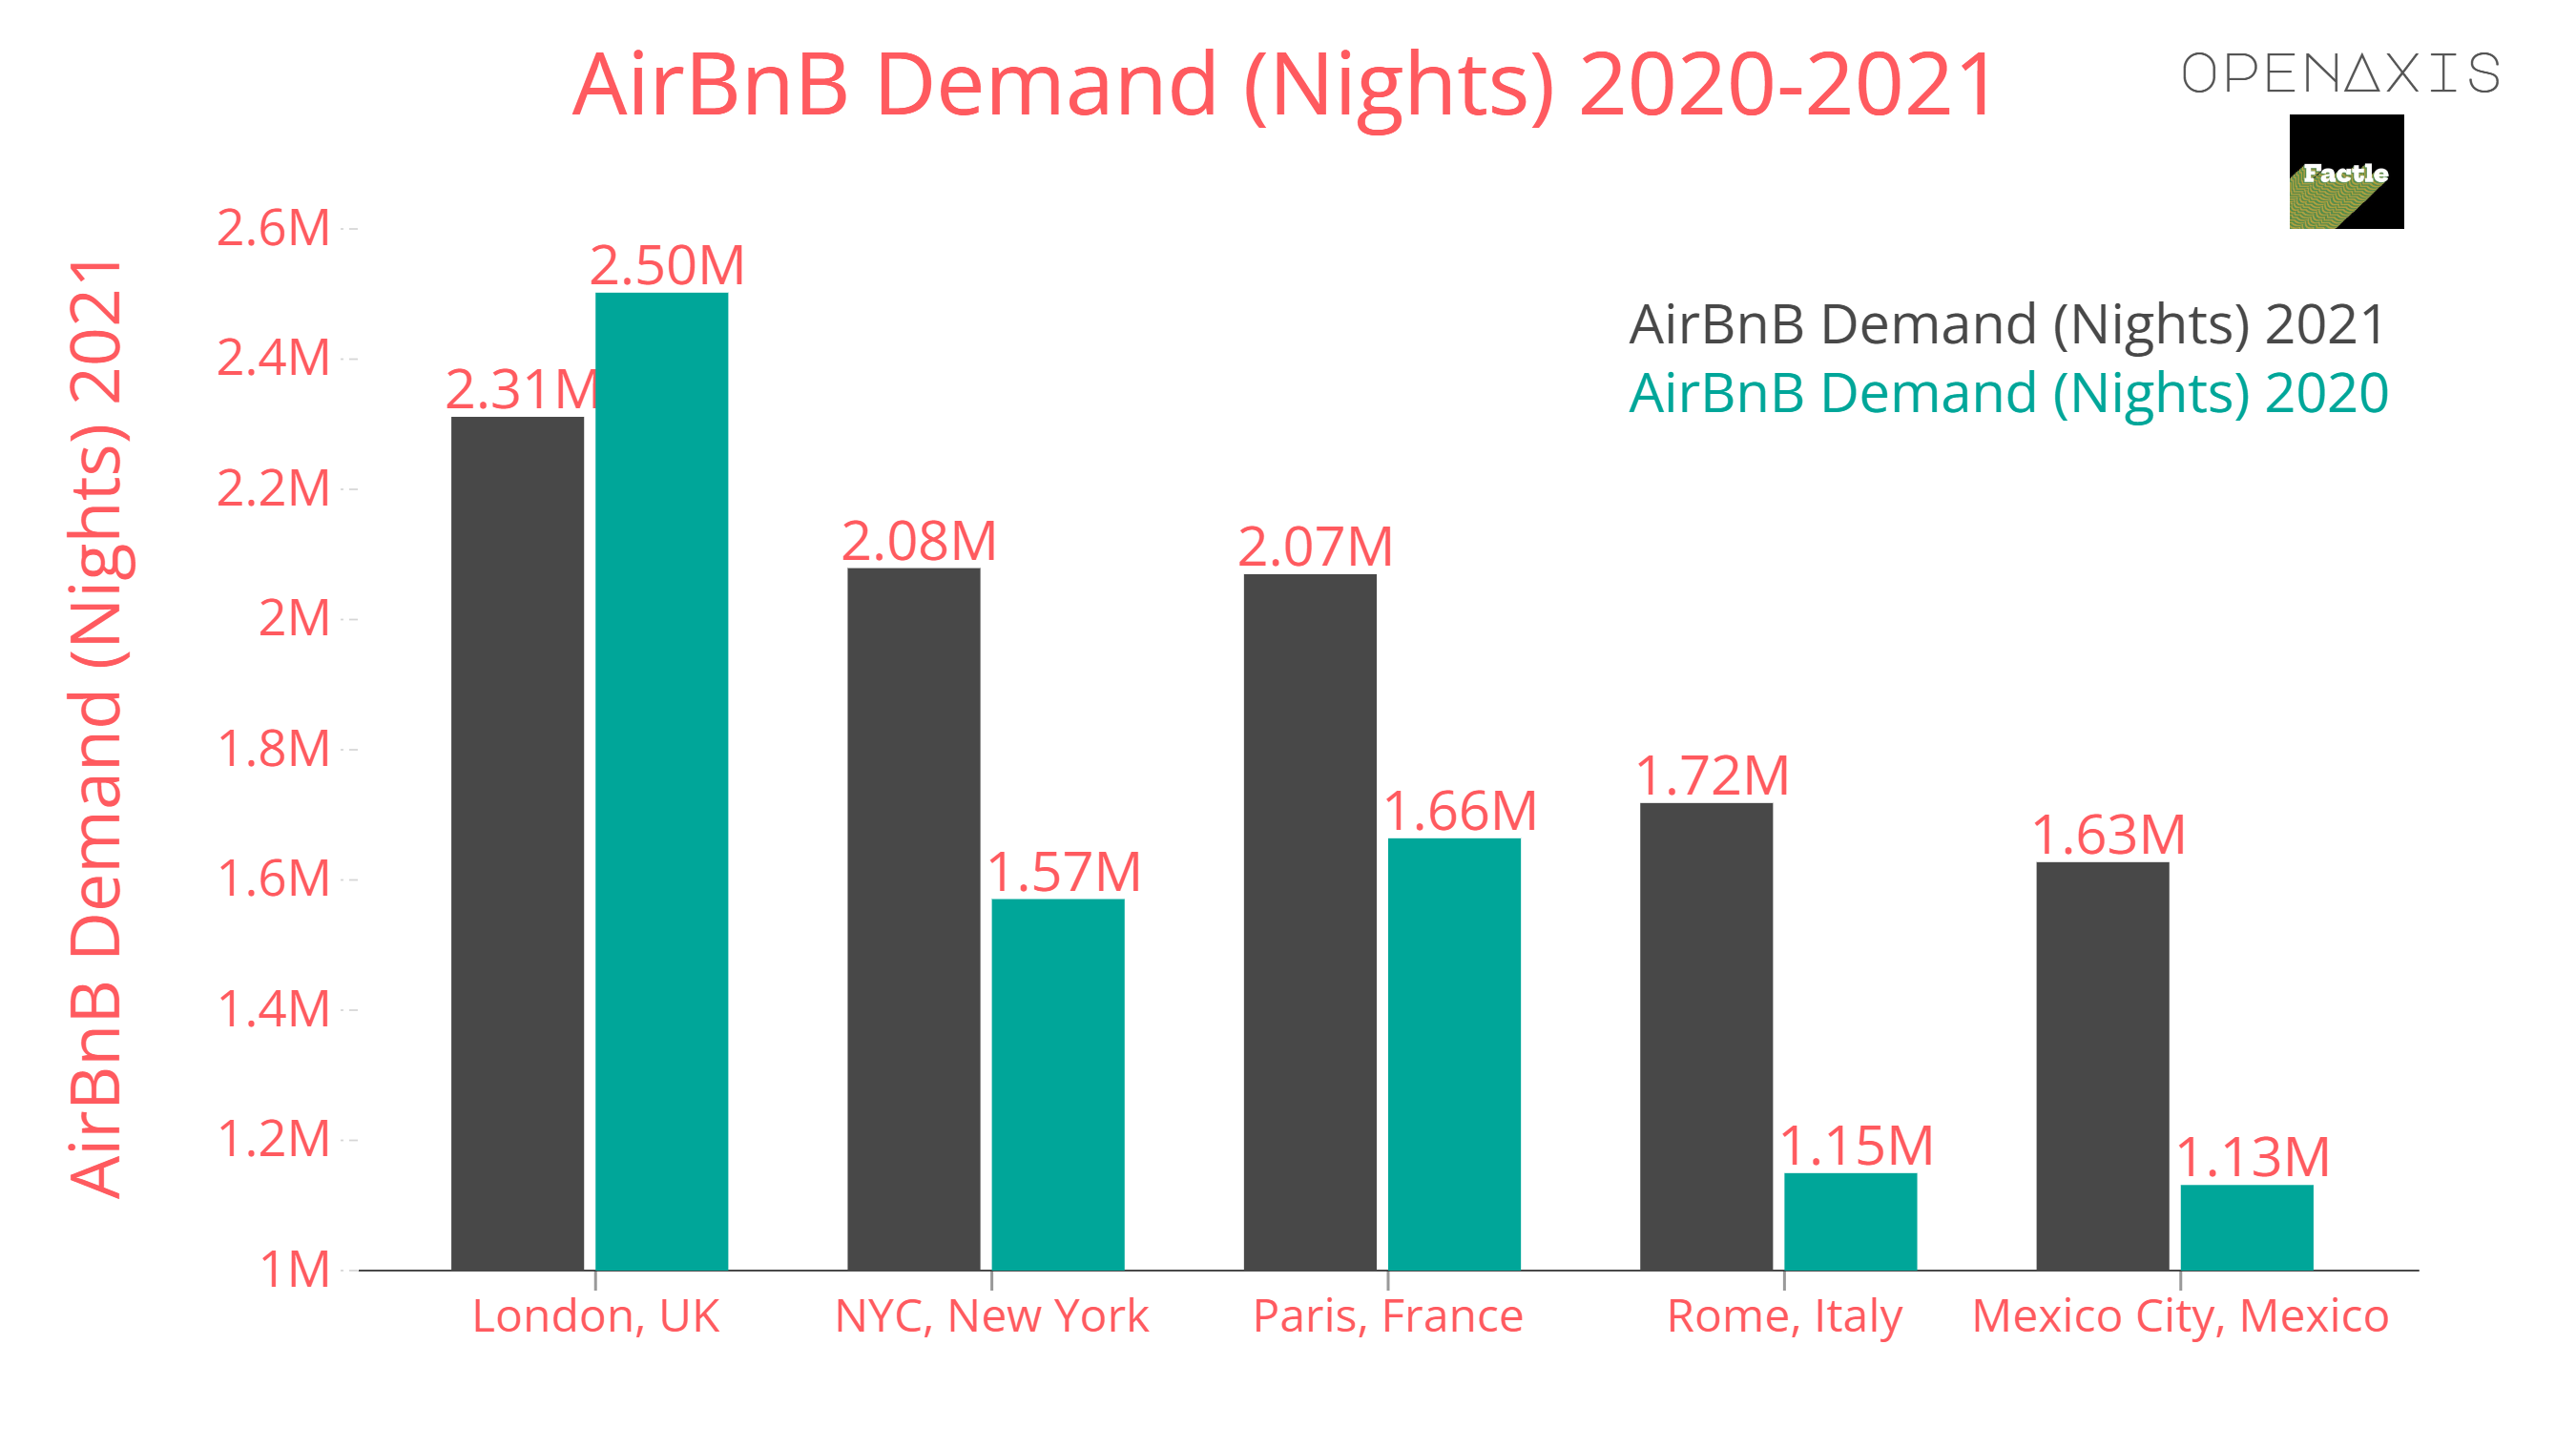 "AirBnB Demand (Nights) 2020-2021"